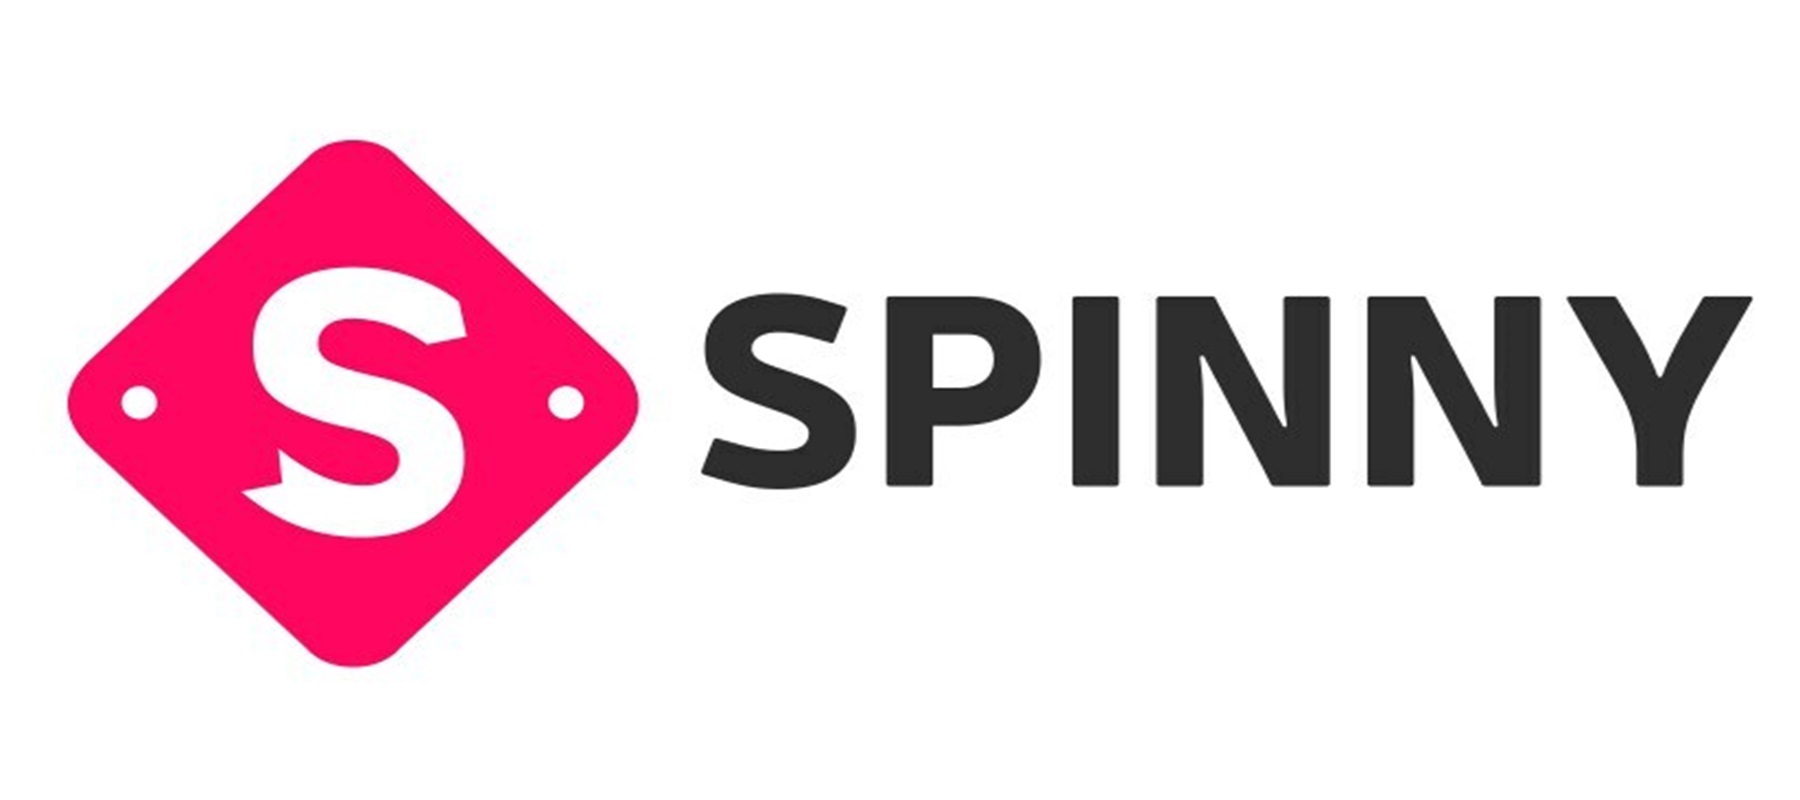 Car retailing platform Spinny unveils Cricket World Cup campaign